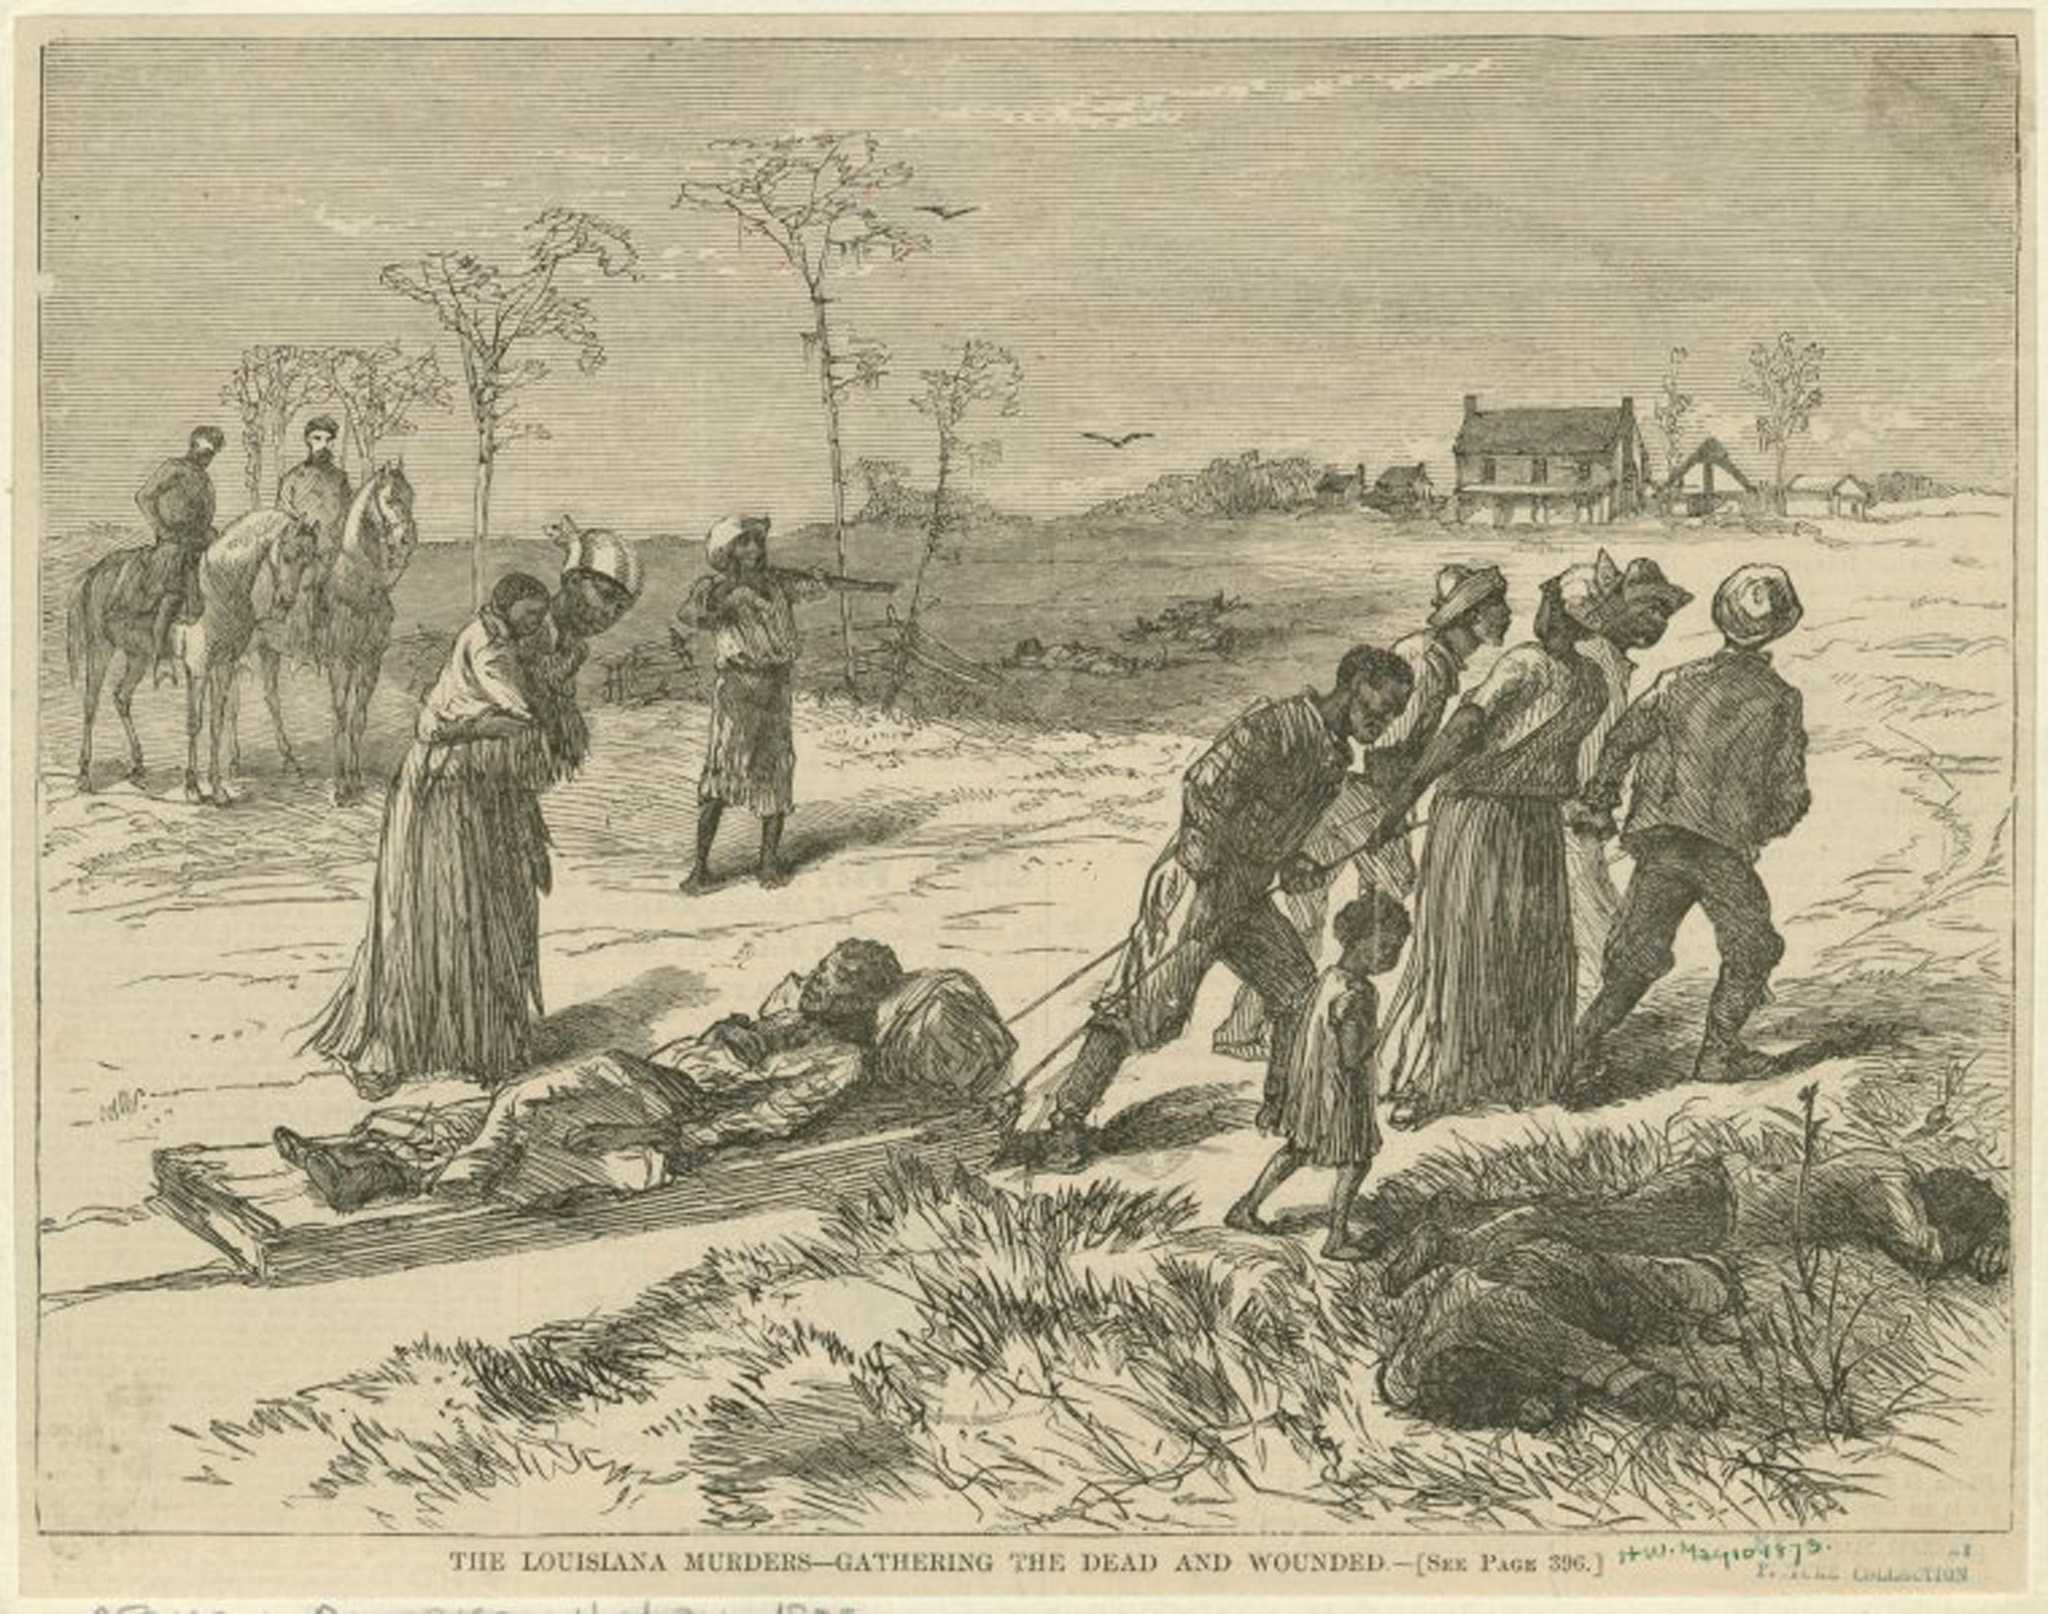 Illustration of Louisiana murders in 1873